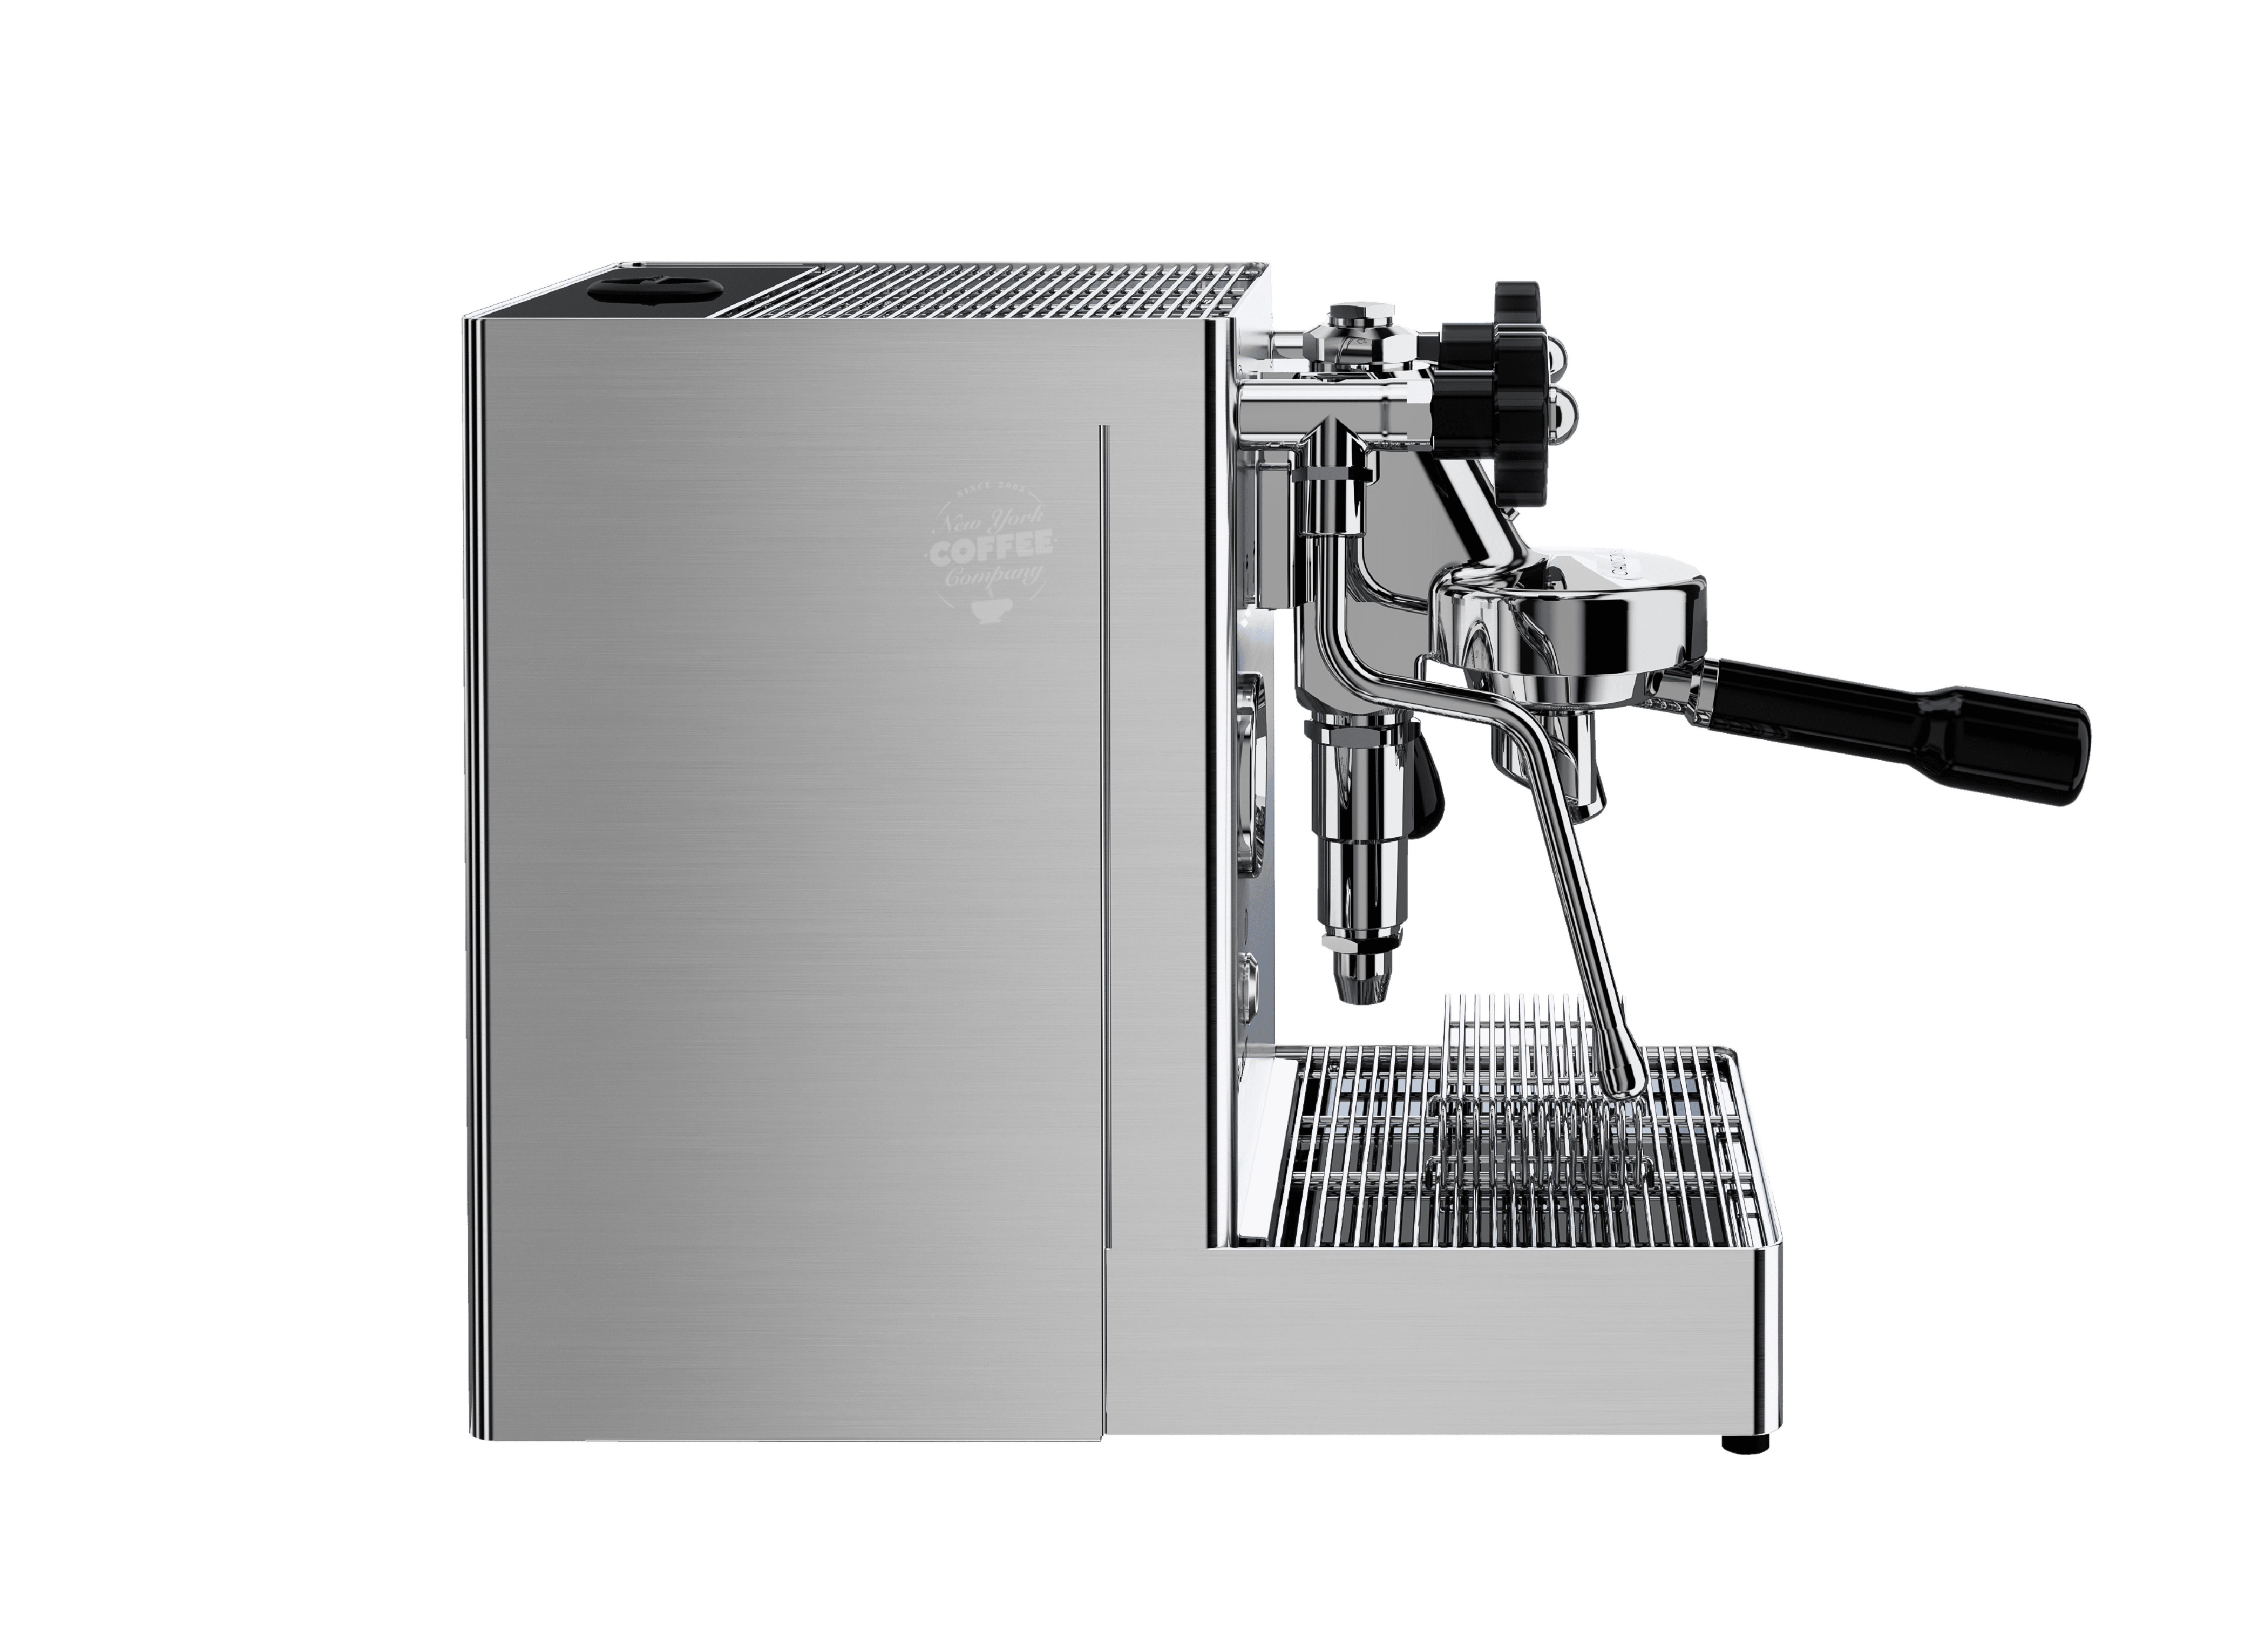 Lelit PL62X Mara V2 espresso machine